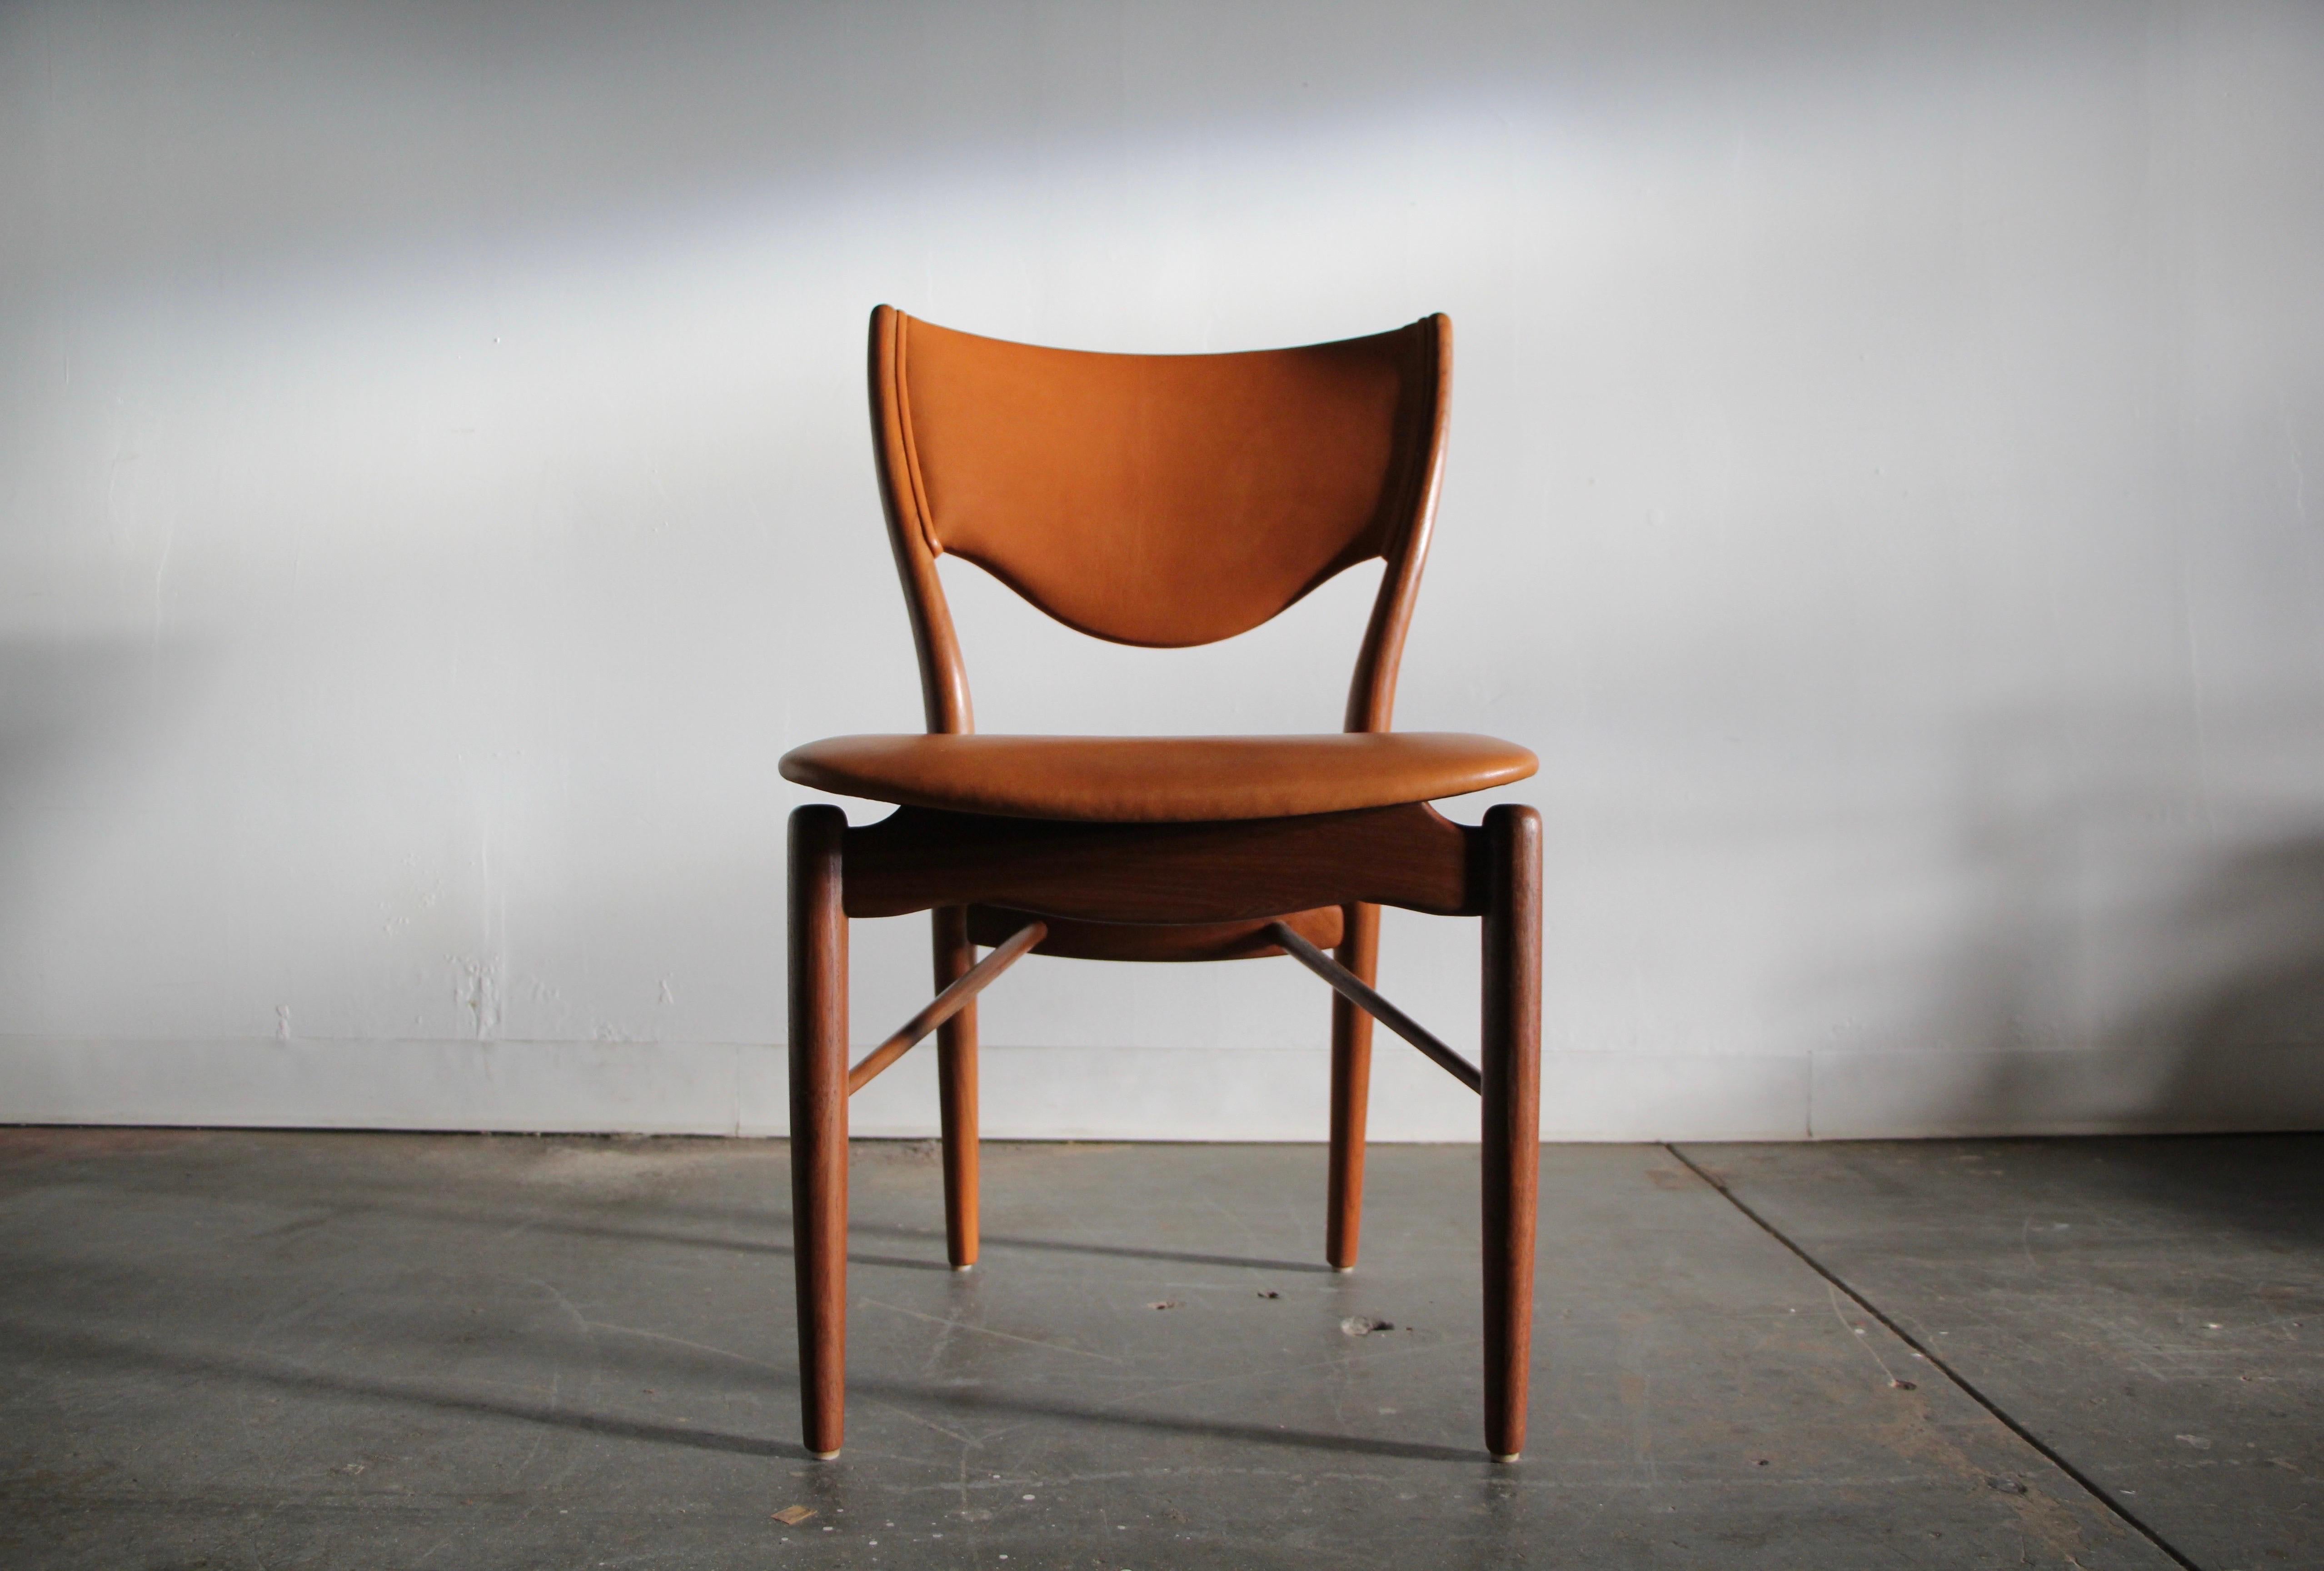 Danish Finn Juhl “BO 63” Sculpted Teak Dining Chairs in Cognac Goatskin Leather, 1950s For Sale